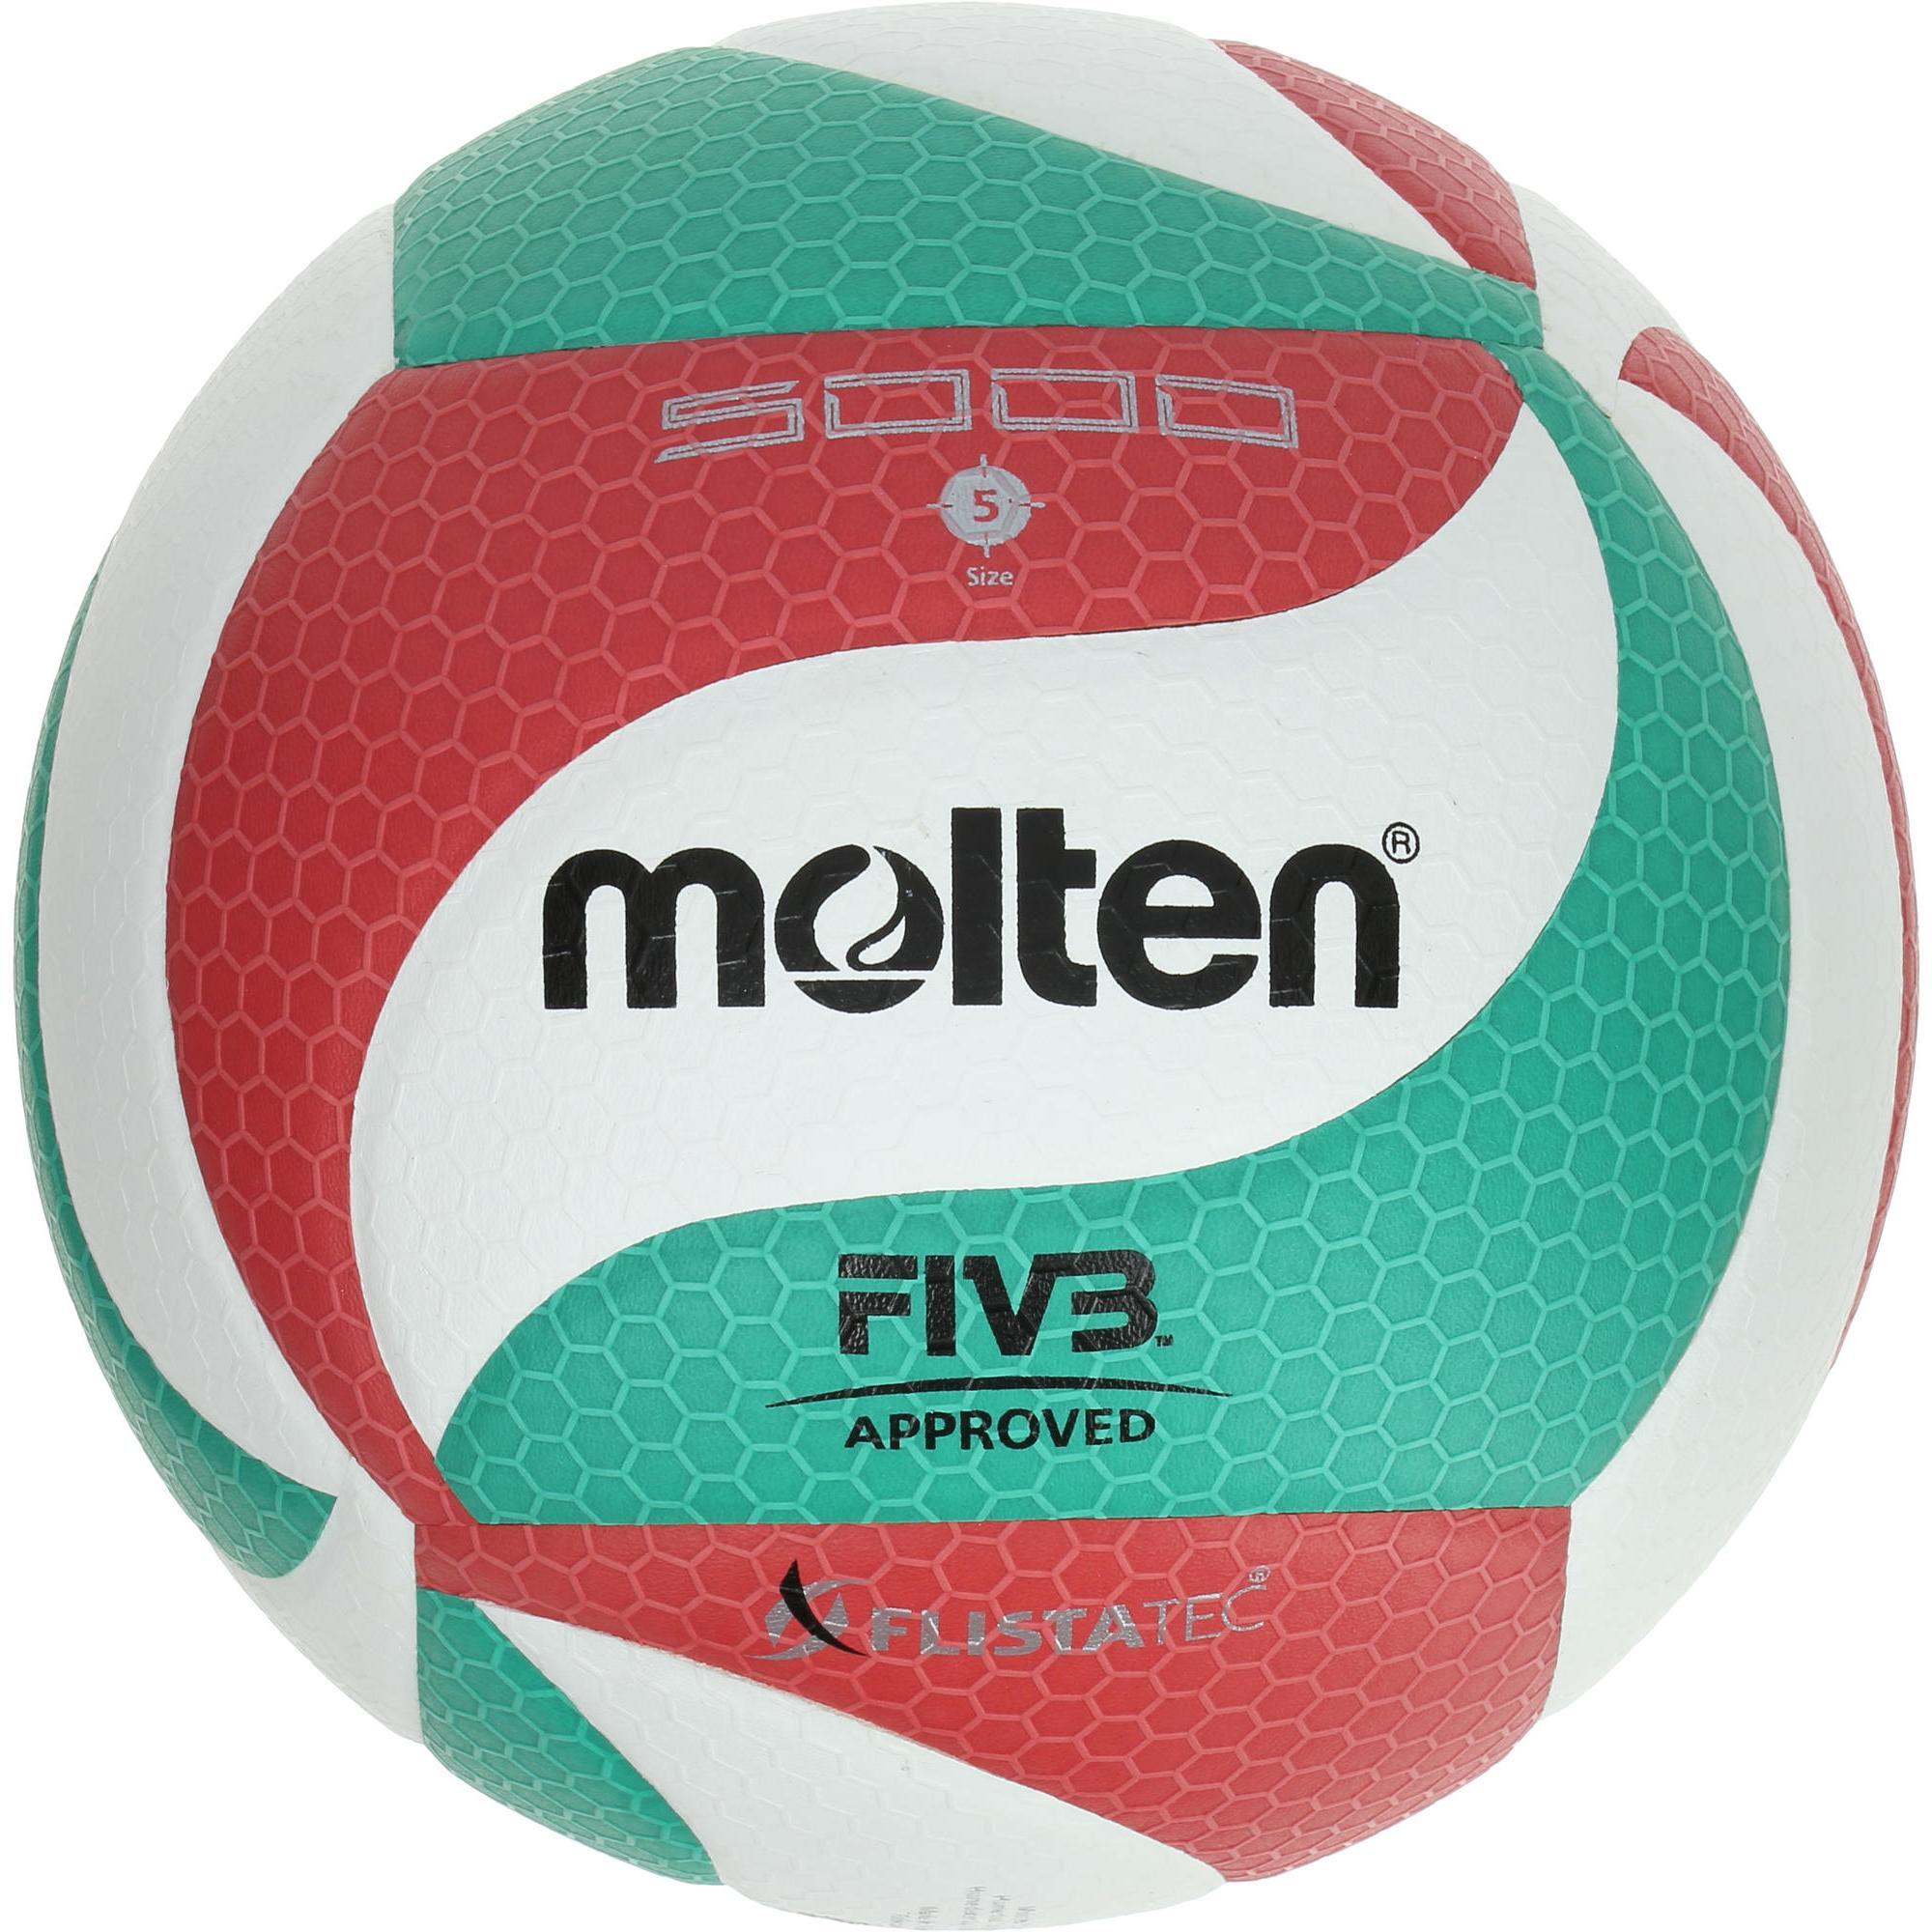 volleyball ball decathlon